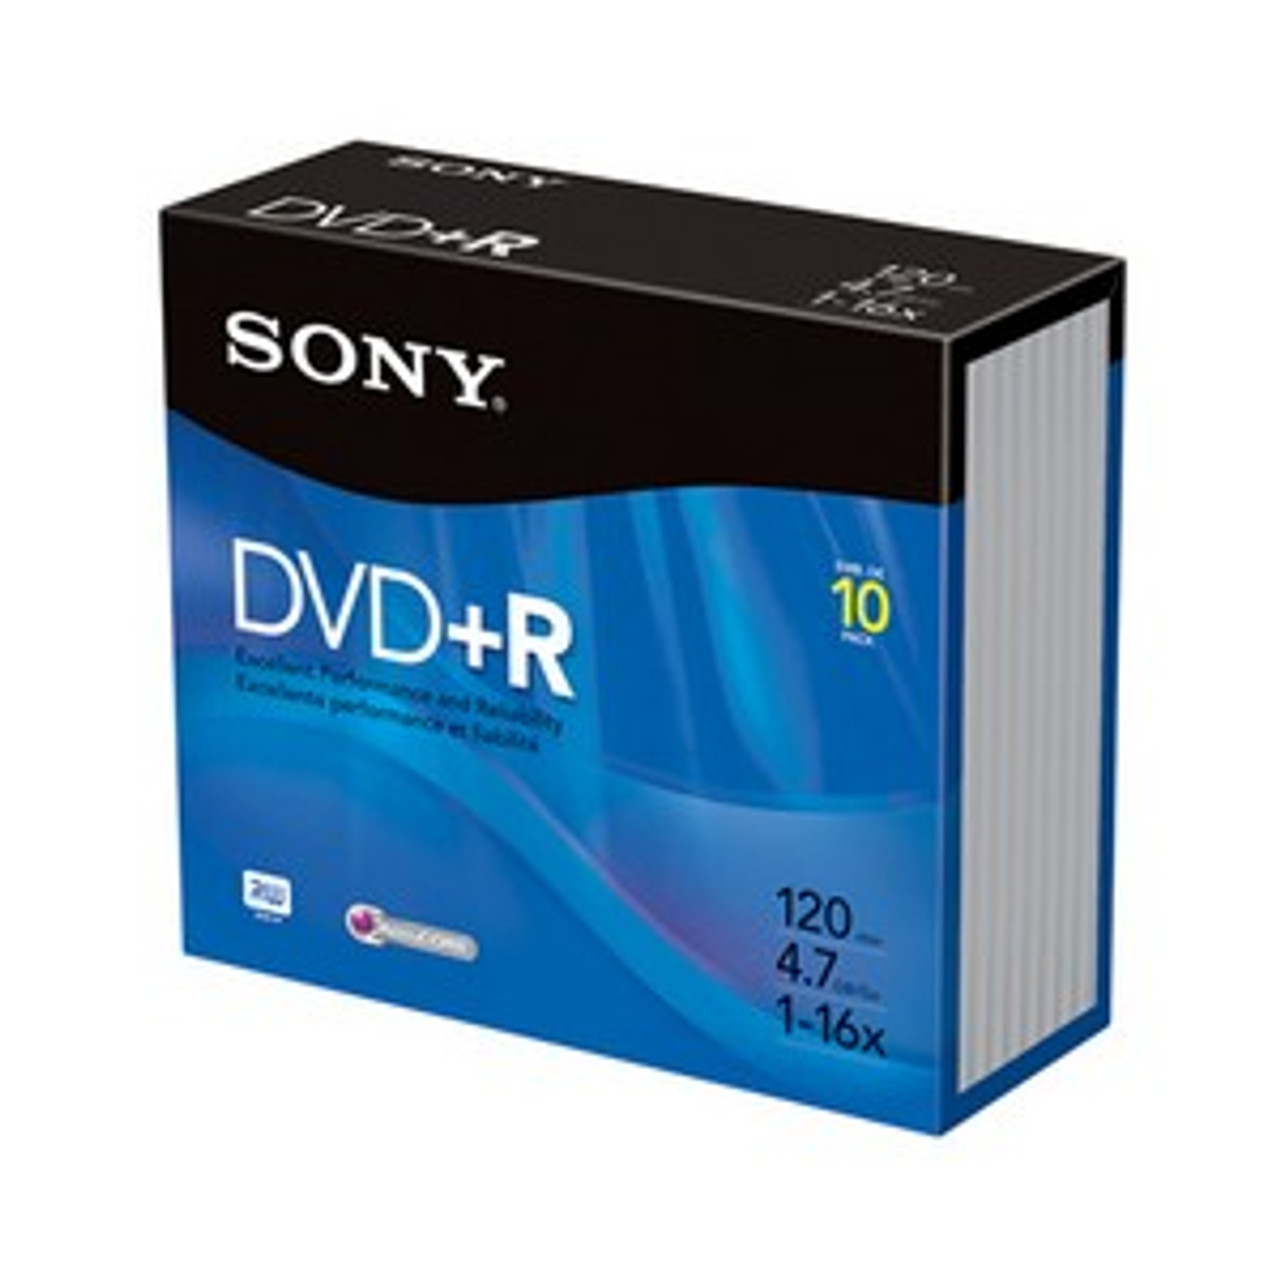 10DPR47R4 - Sony 10DPR47R4 16x dvd+R Media - 4.7GB - 120mm Standard - 10 Pack Jewel Case